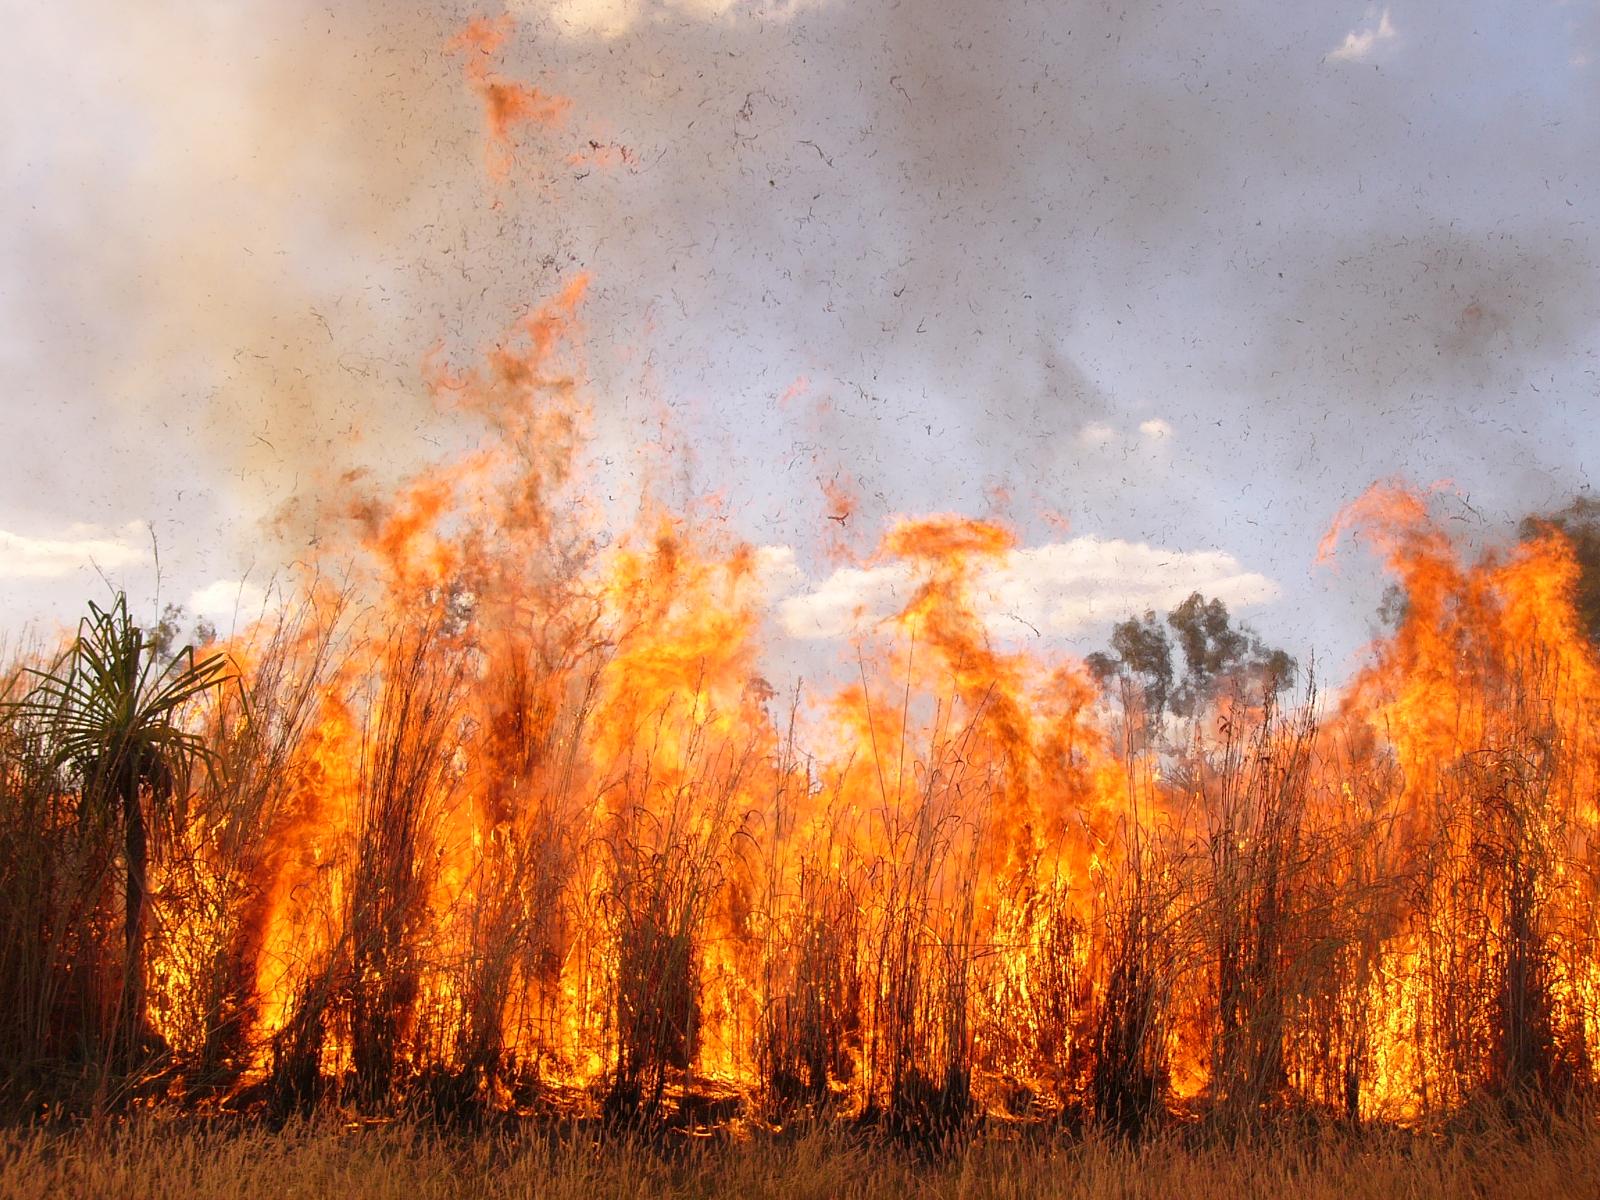 Gamba grass fire: flames leaping above tall grass